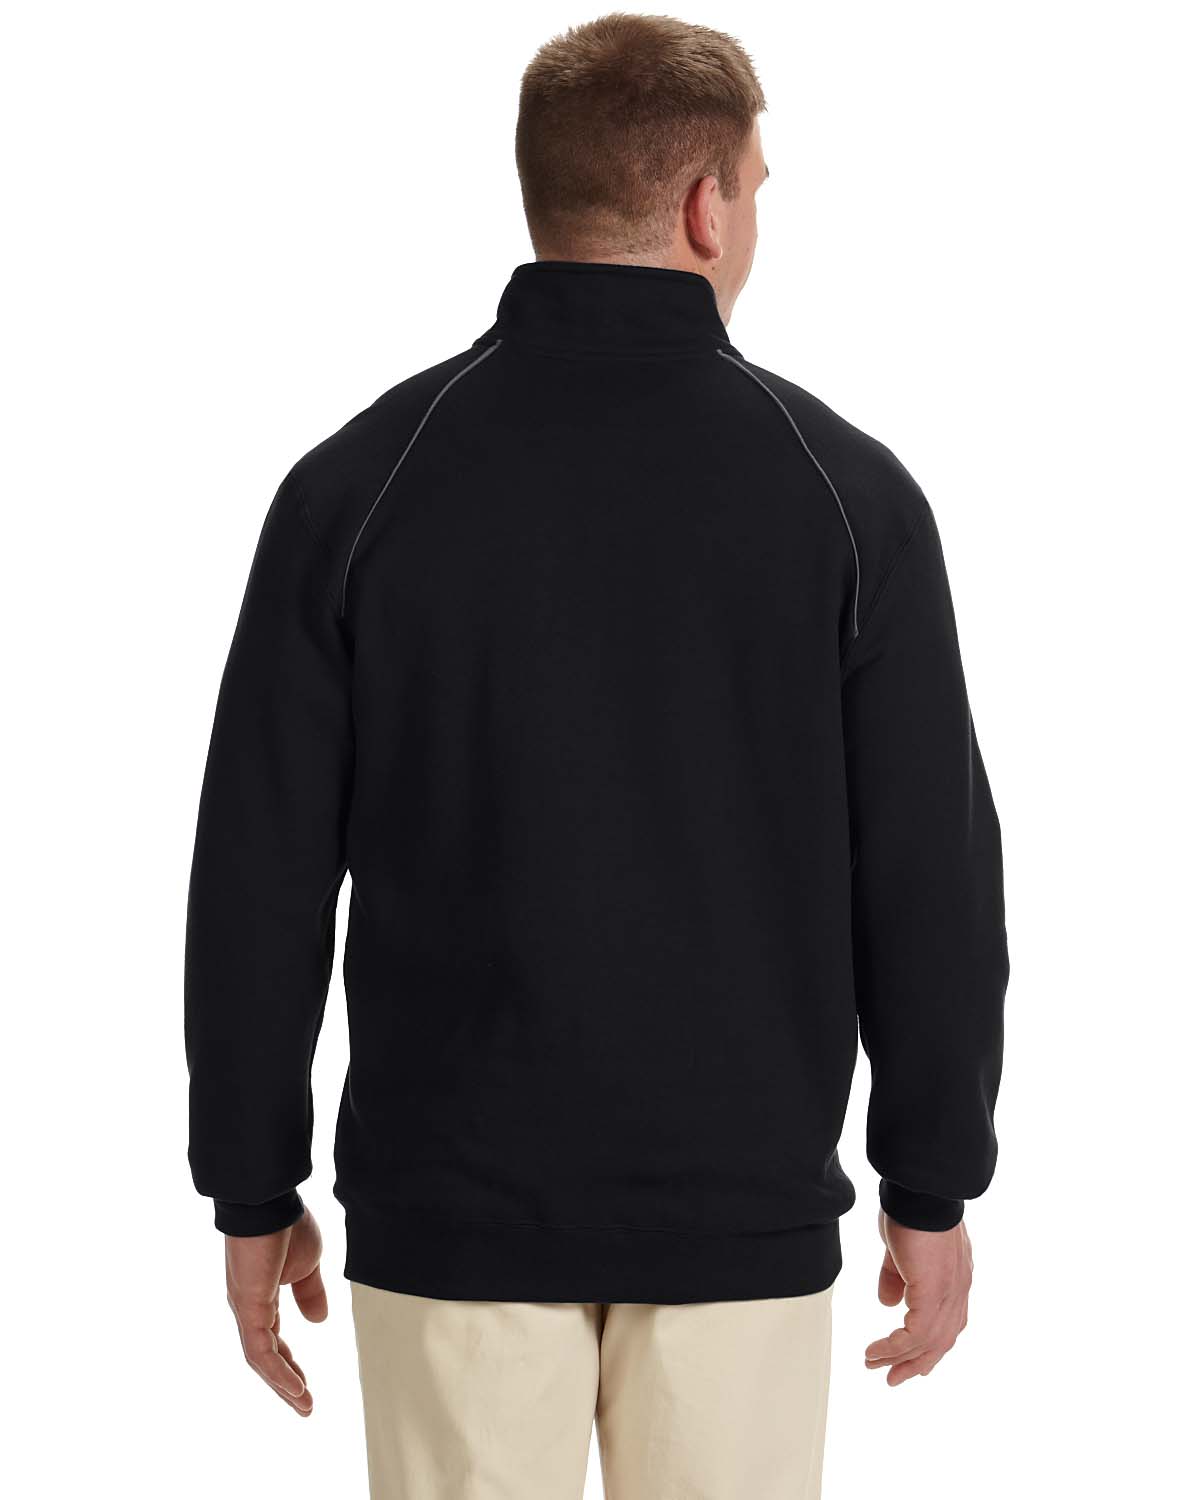 NEW Gildan Mens Premium Cotton Ringspun Fleece Full Zip Jacket S-3XL ...